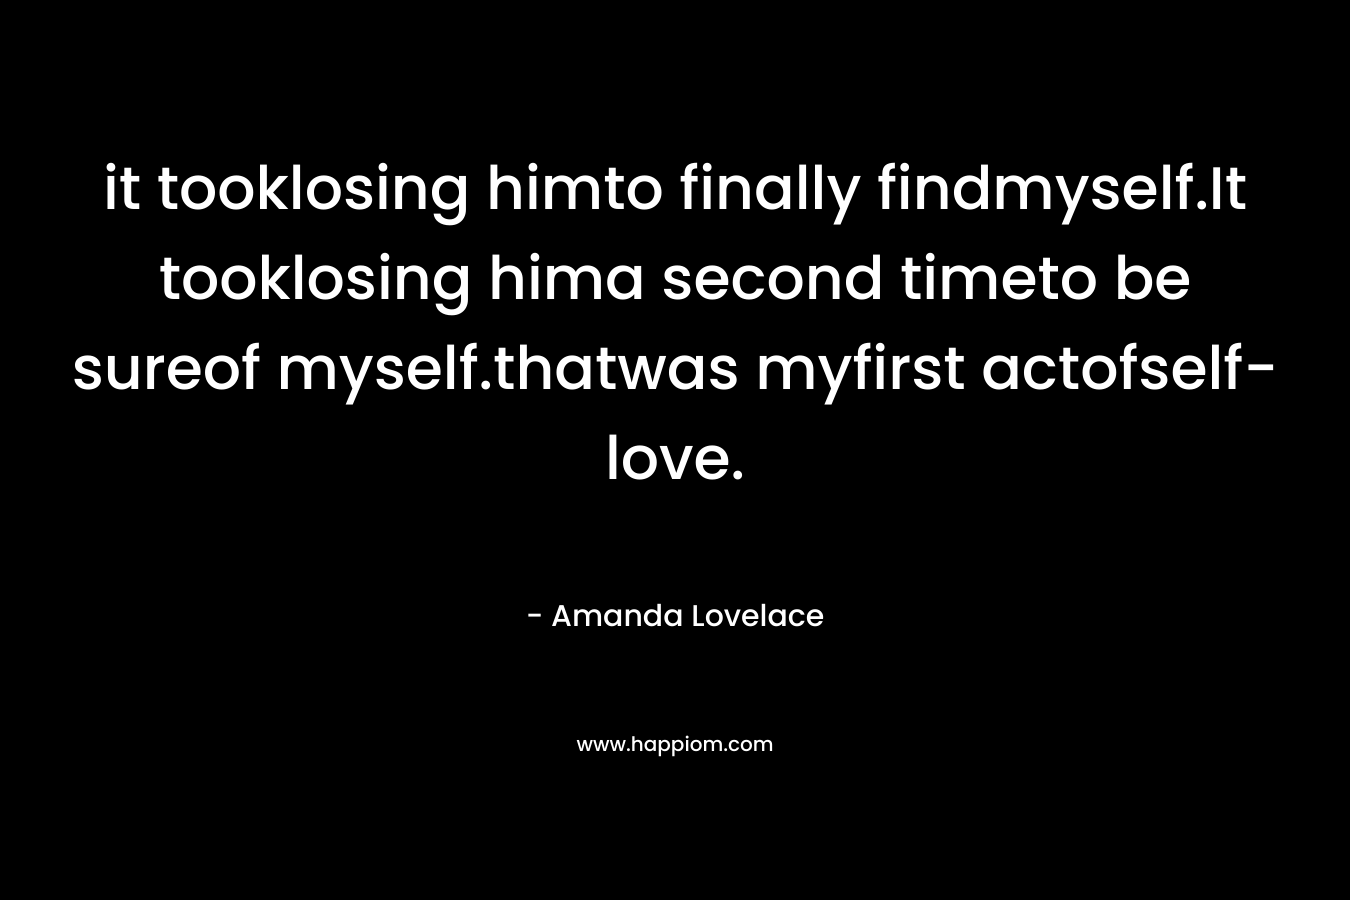 it tooklosing himto finally findmyself.It tooklosing hima second timeto be sureof myself.thatwas myfirst actofself-love. – Amanda Lovelace